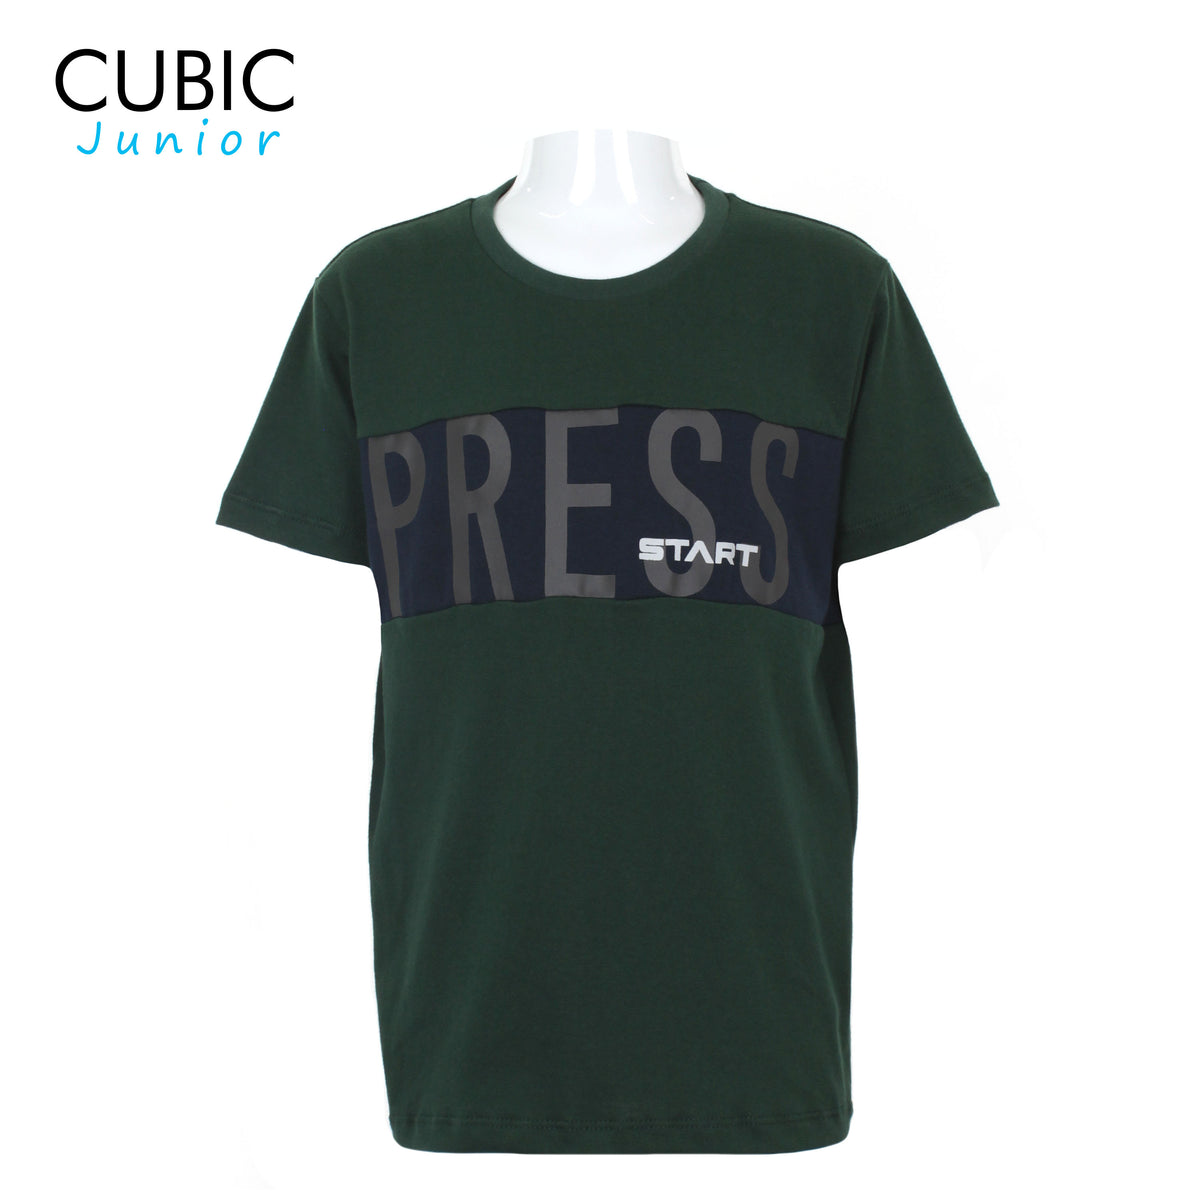 Cubic Boys Kids Round Neck Press Start Graphic Print Design T-shirt Shirt Top for Boys - CKJ2218R